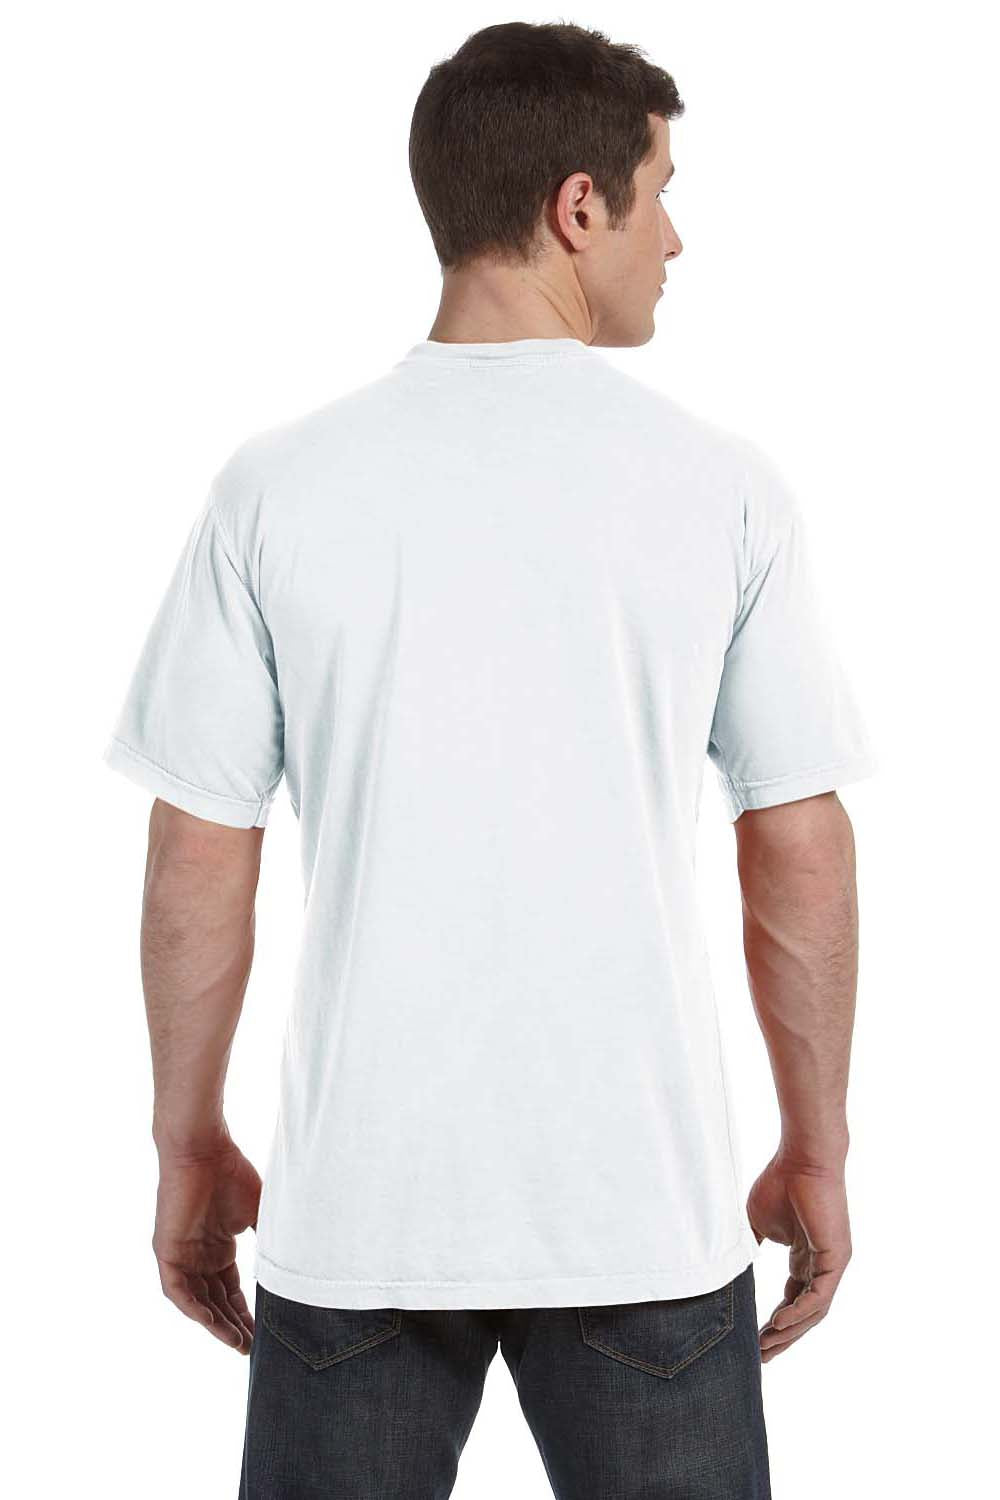 Comfort Colors C4017 Mens Short Sleeve Crewneck T-Shirt White Back